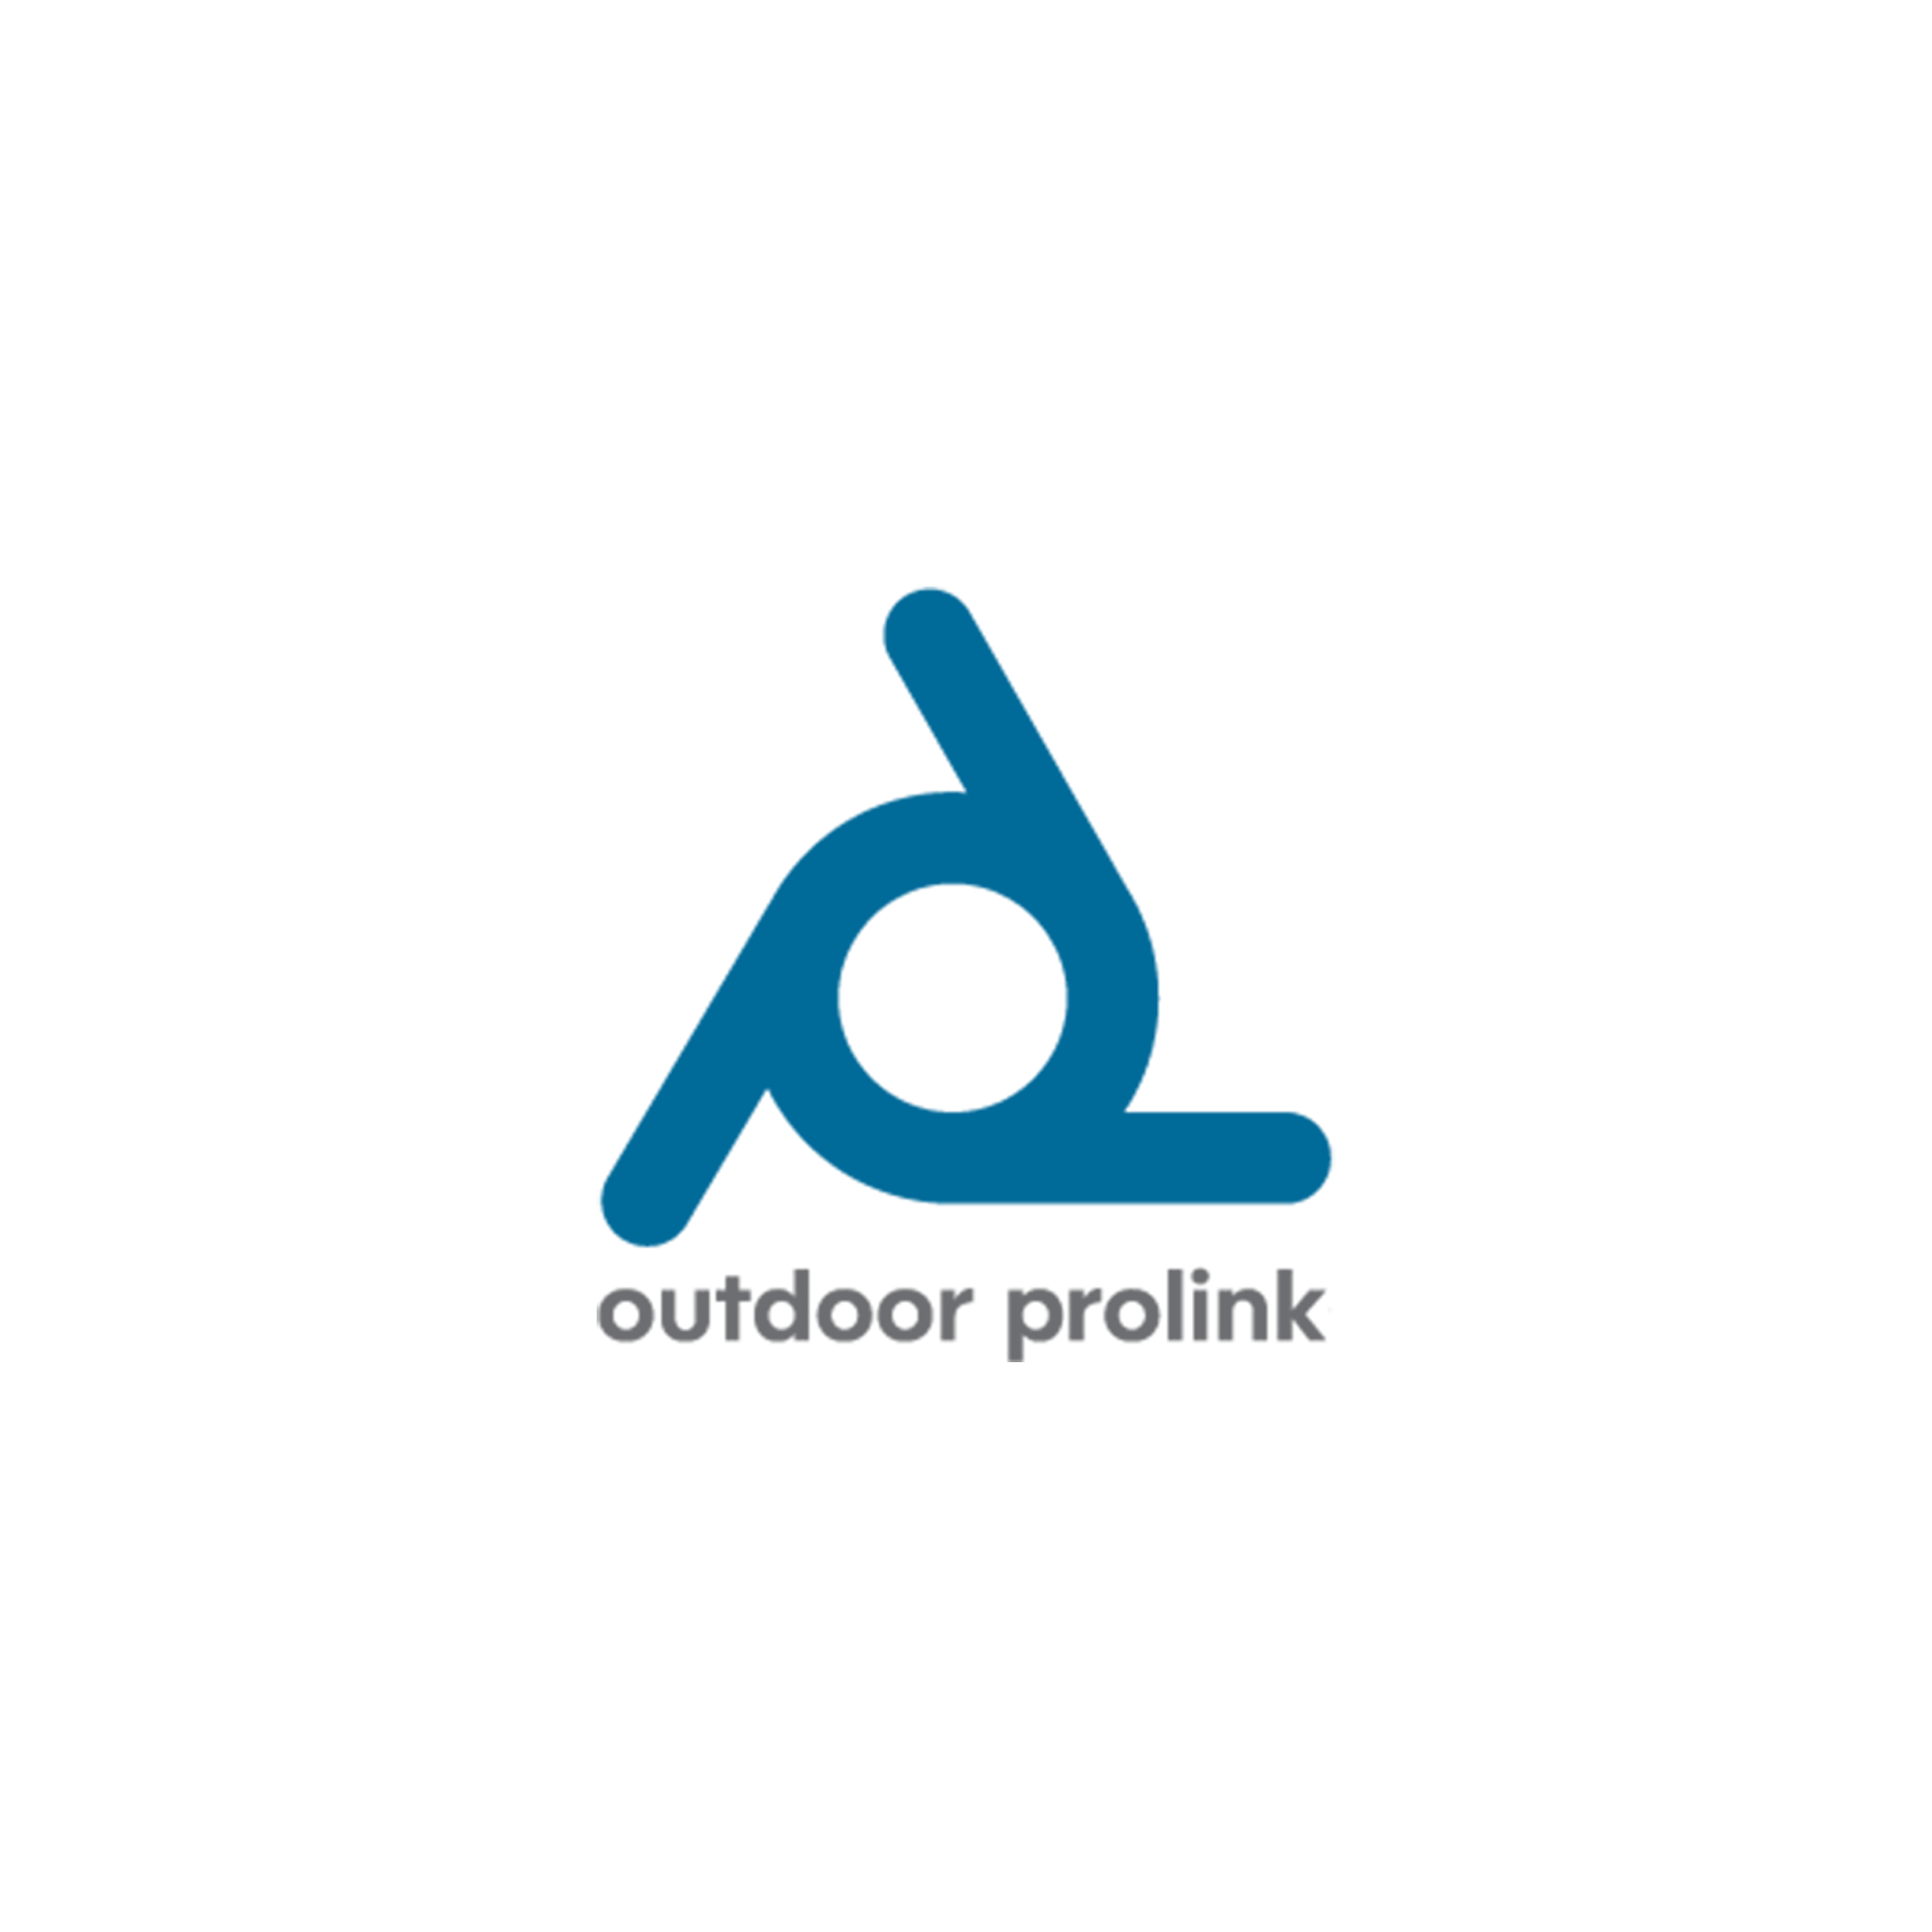 outdoor prolink logo